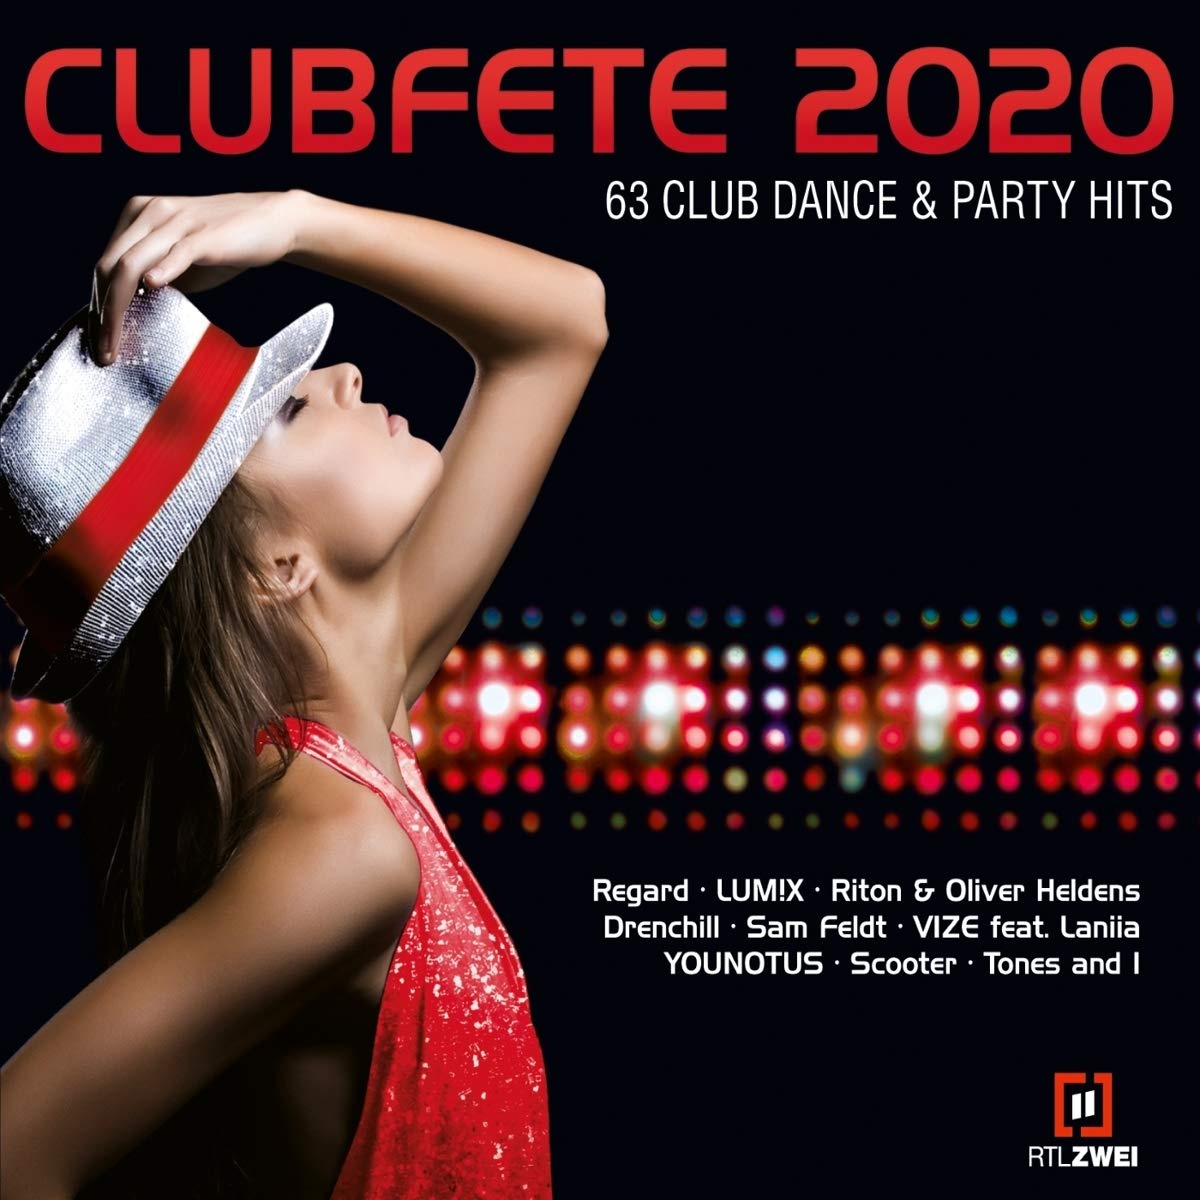 Clubfete 2020 (63 Club Dance & Party Hits, 3 CD) купить в интернет мага...